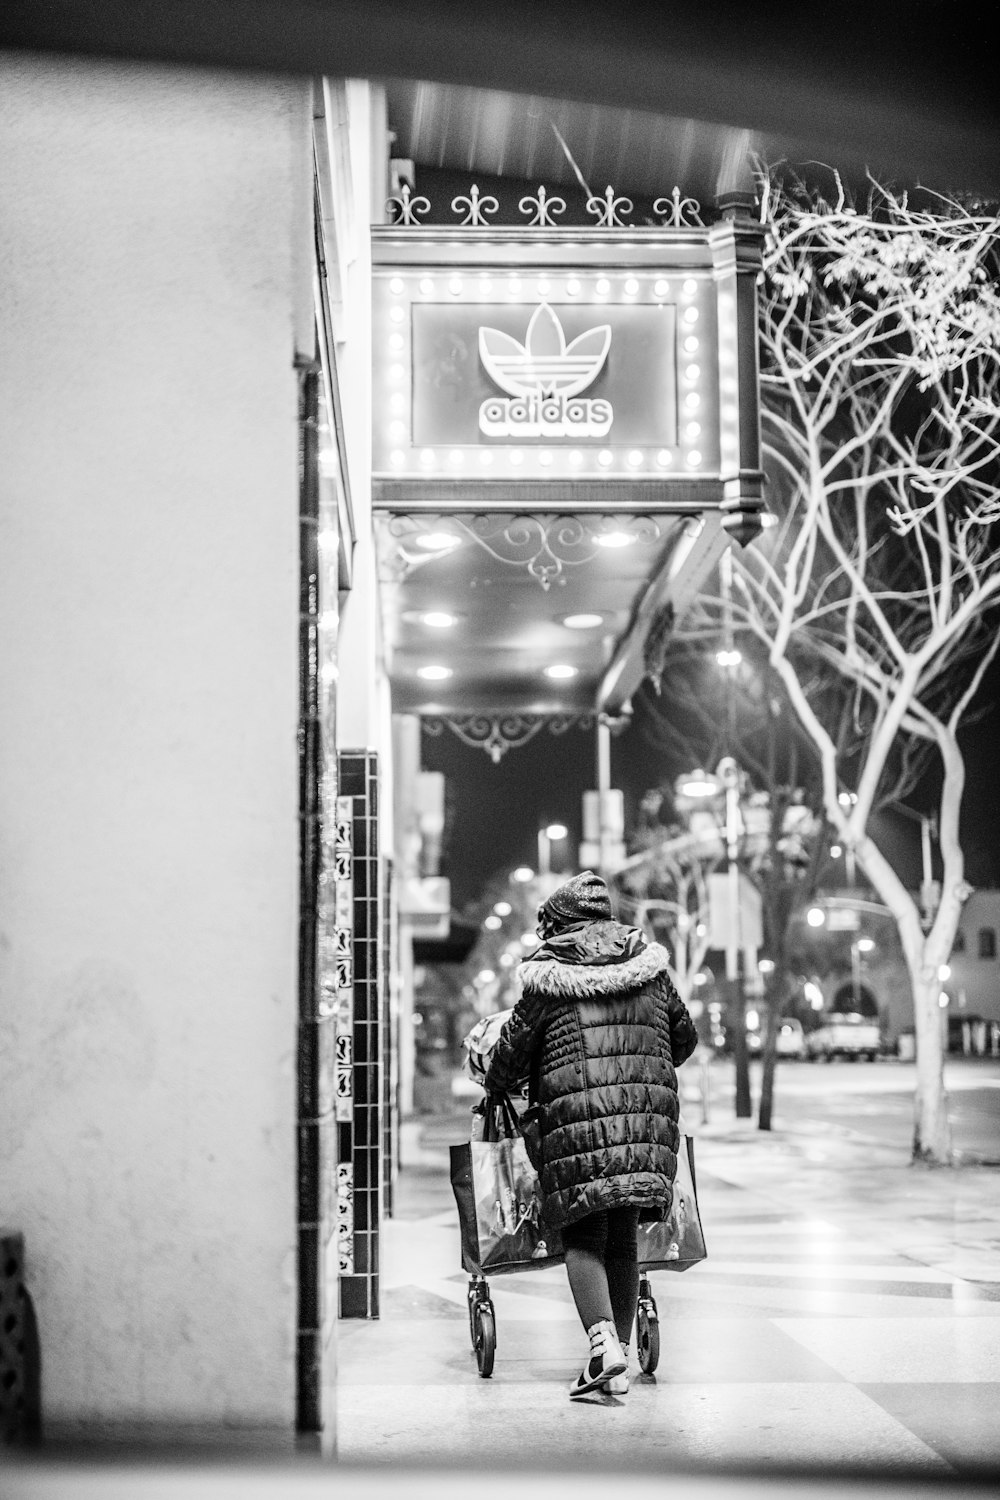 grayscale photo of person walking on sidewalk near Adidas store